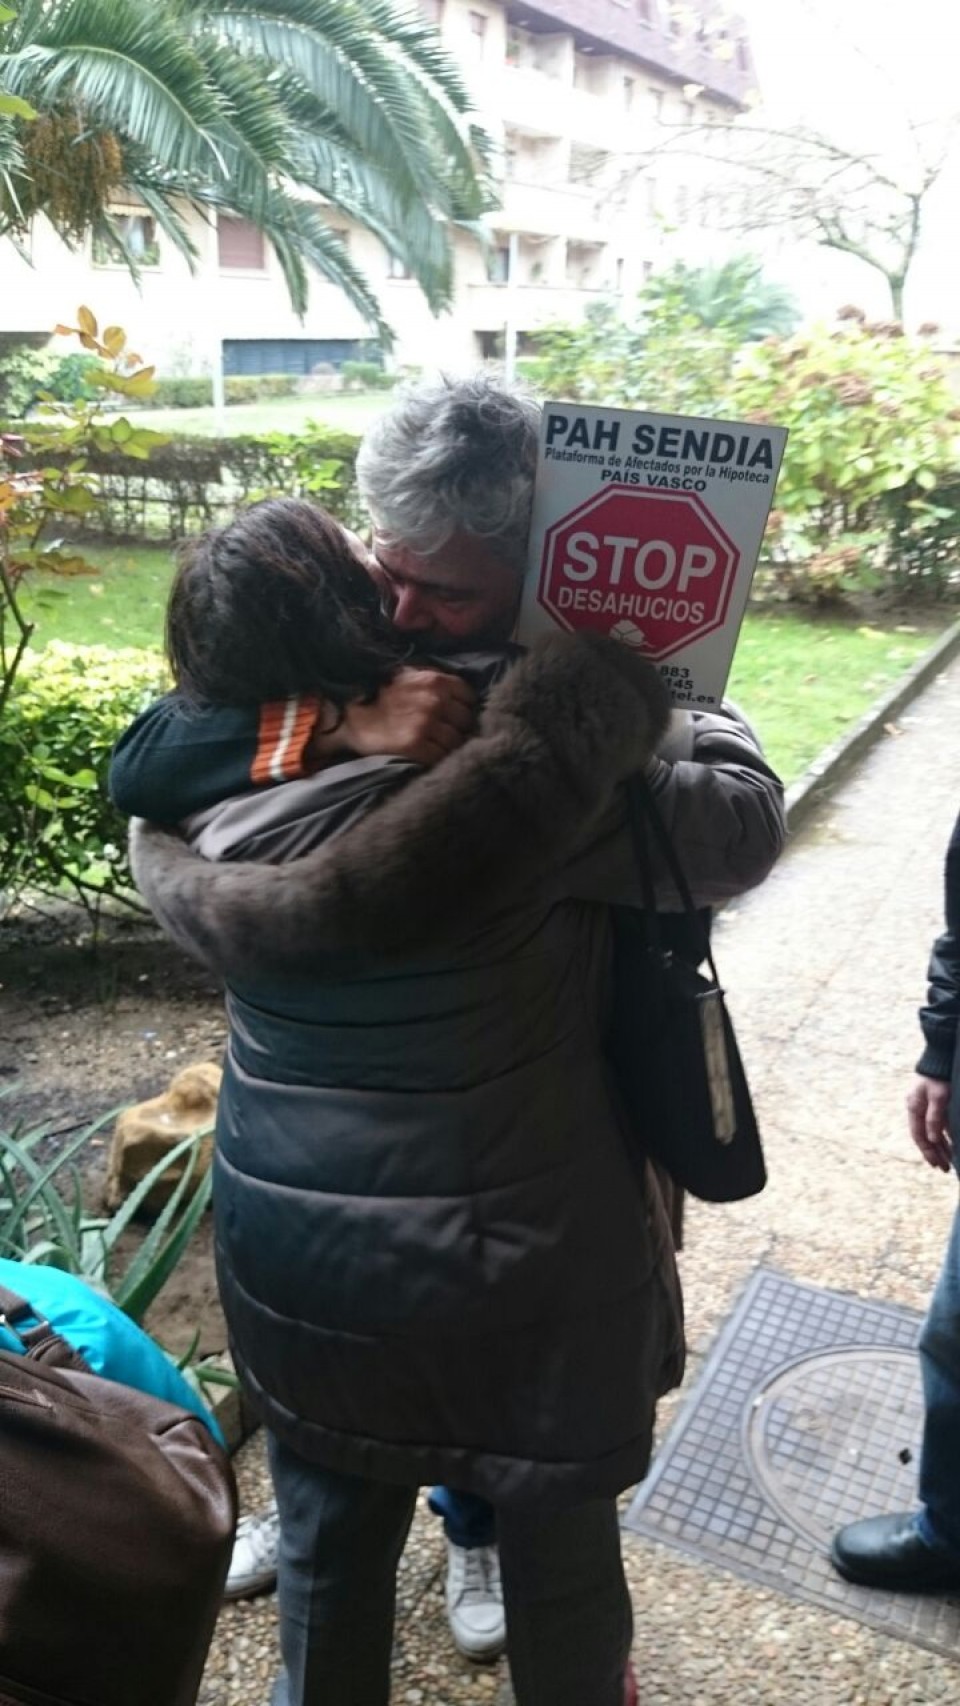 La representante de PAH Sendia abraza al algortarra que iba a ser desahuciado. Foto: eitb.eus